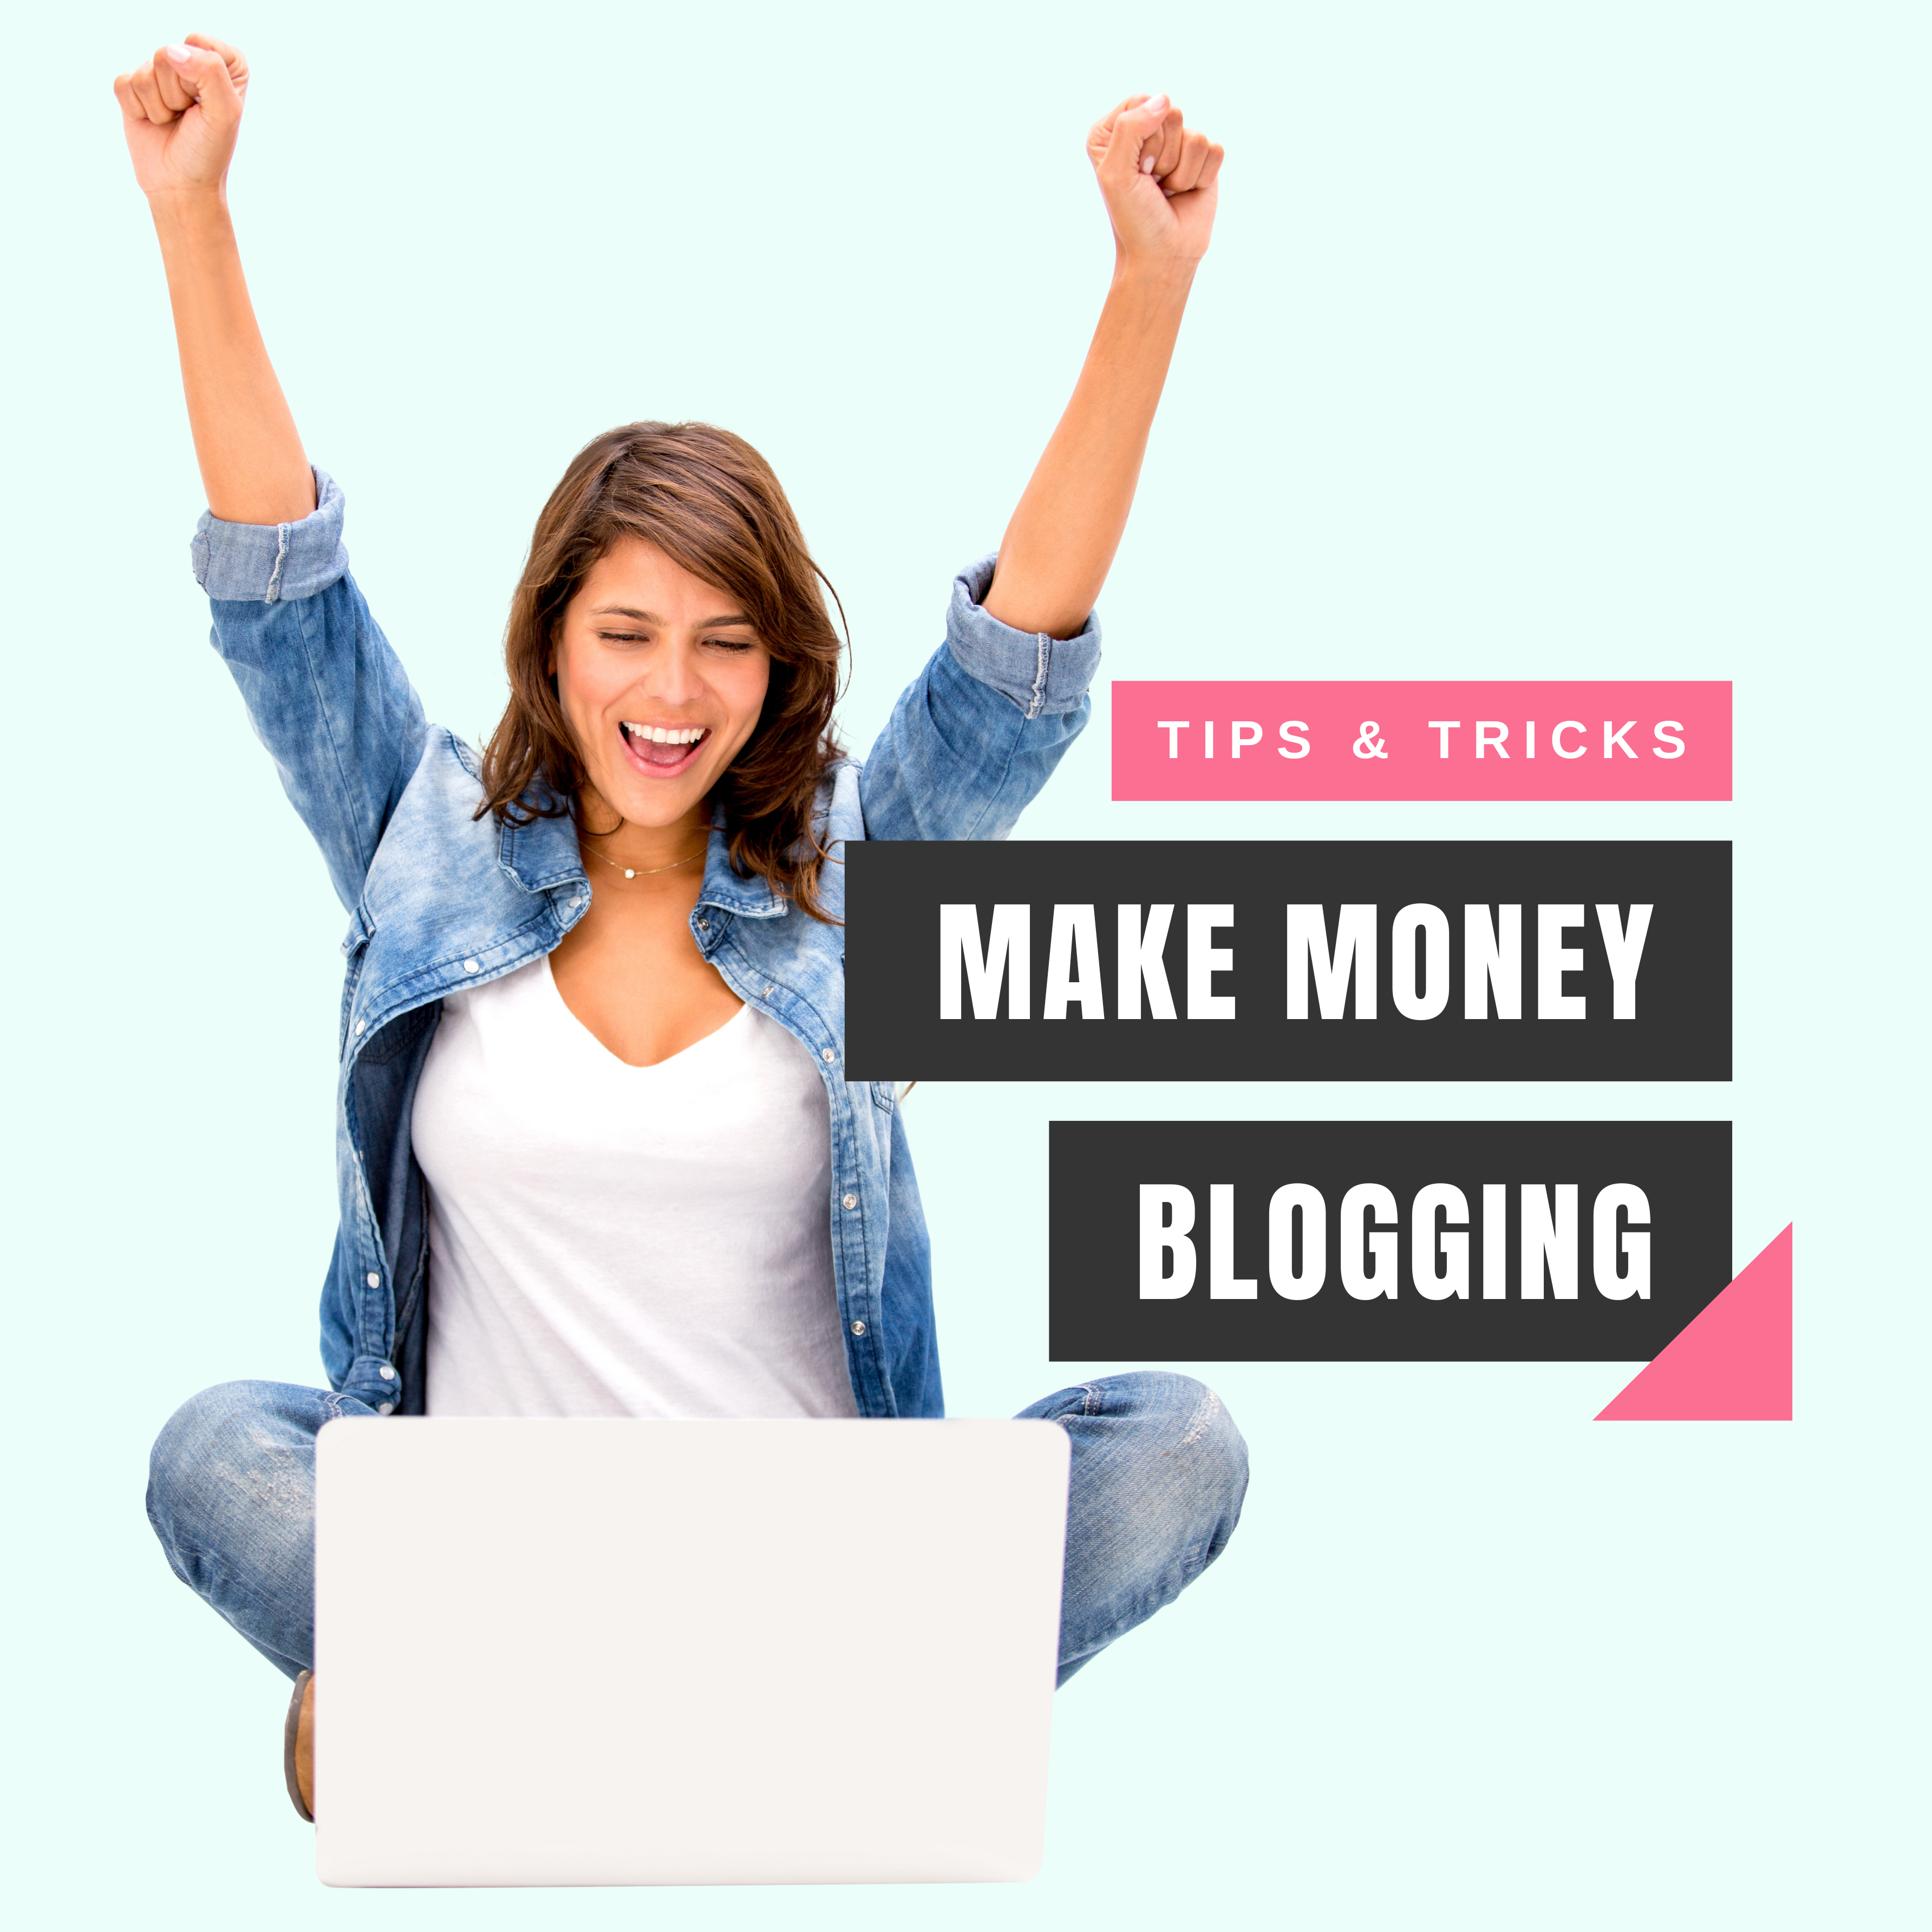 Make money blogging tips and tricks (2)